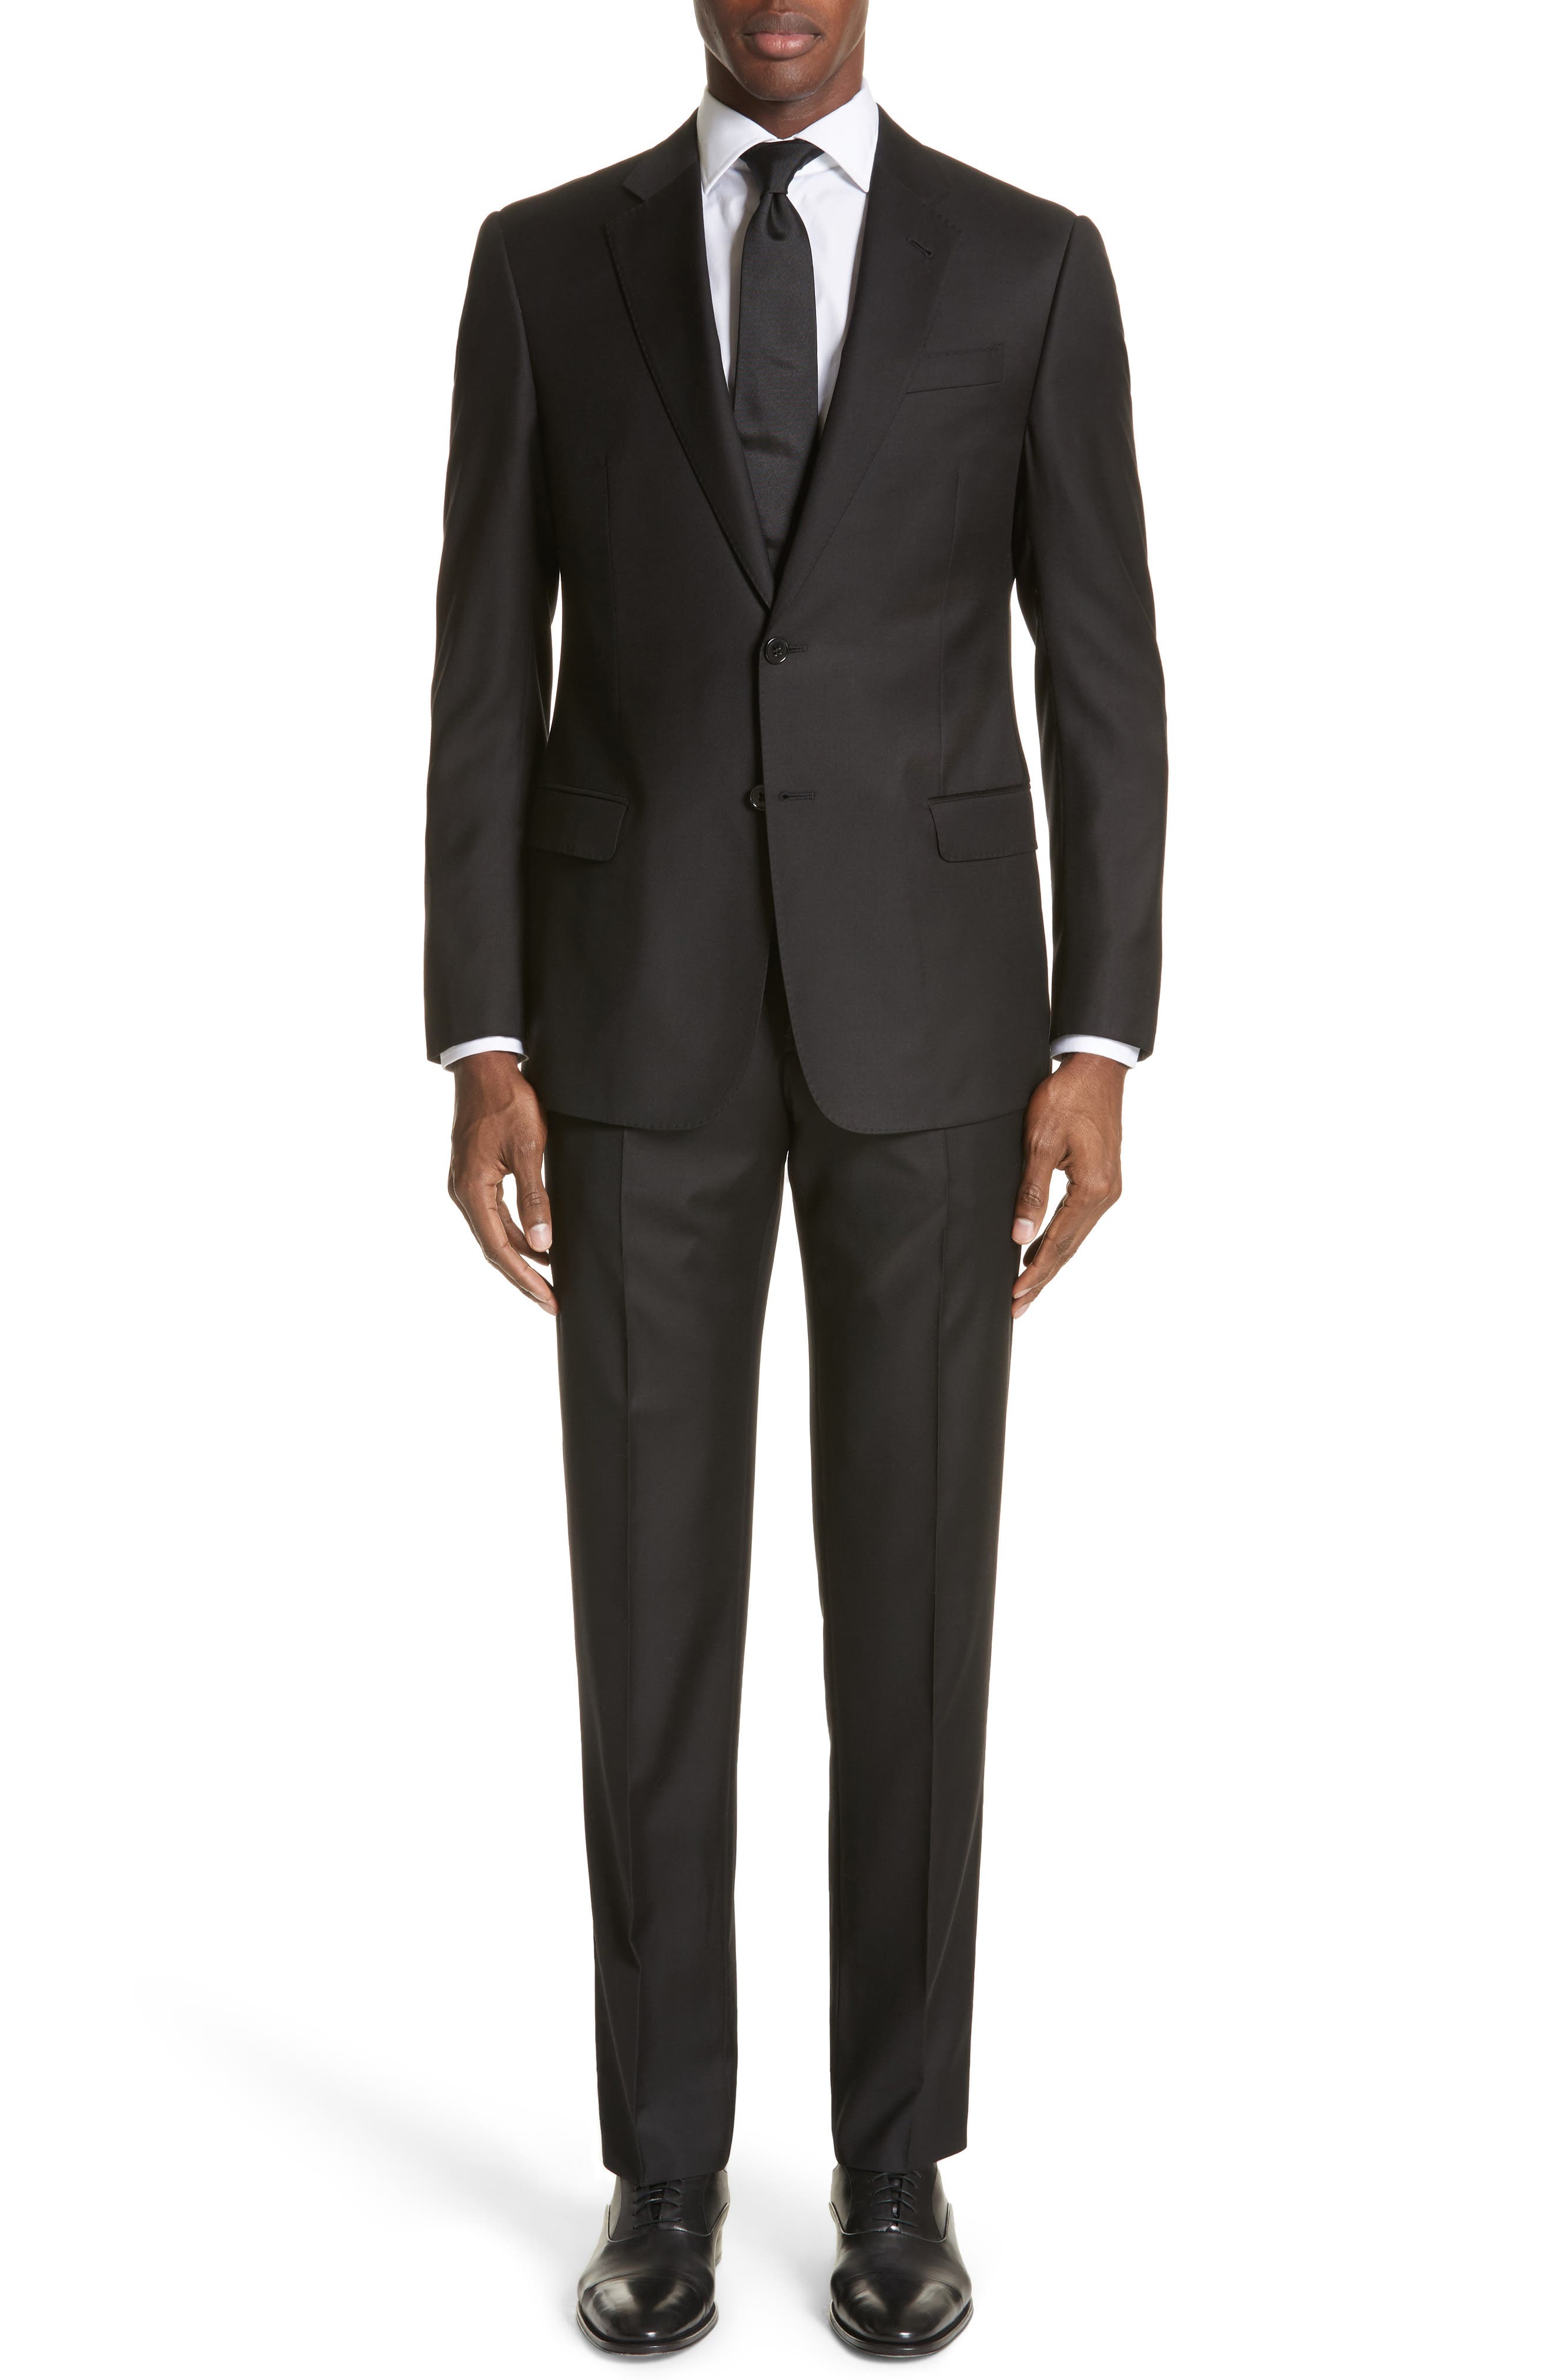 armani black suit